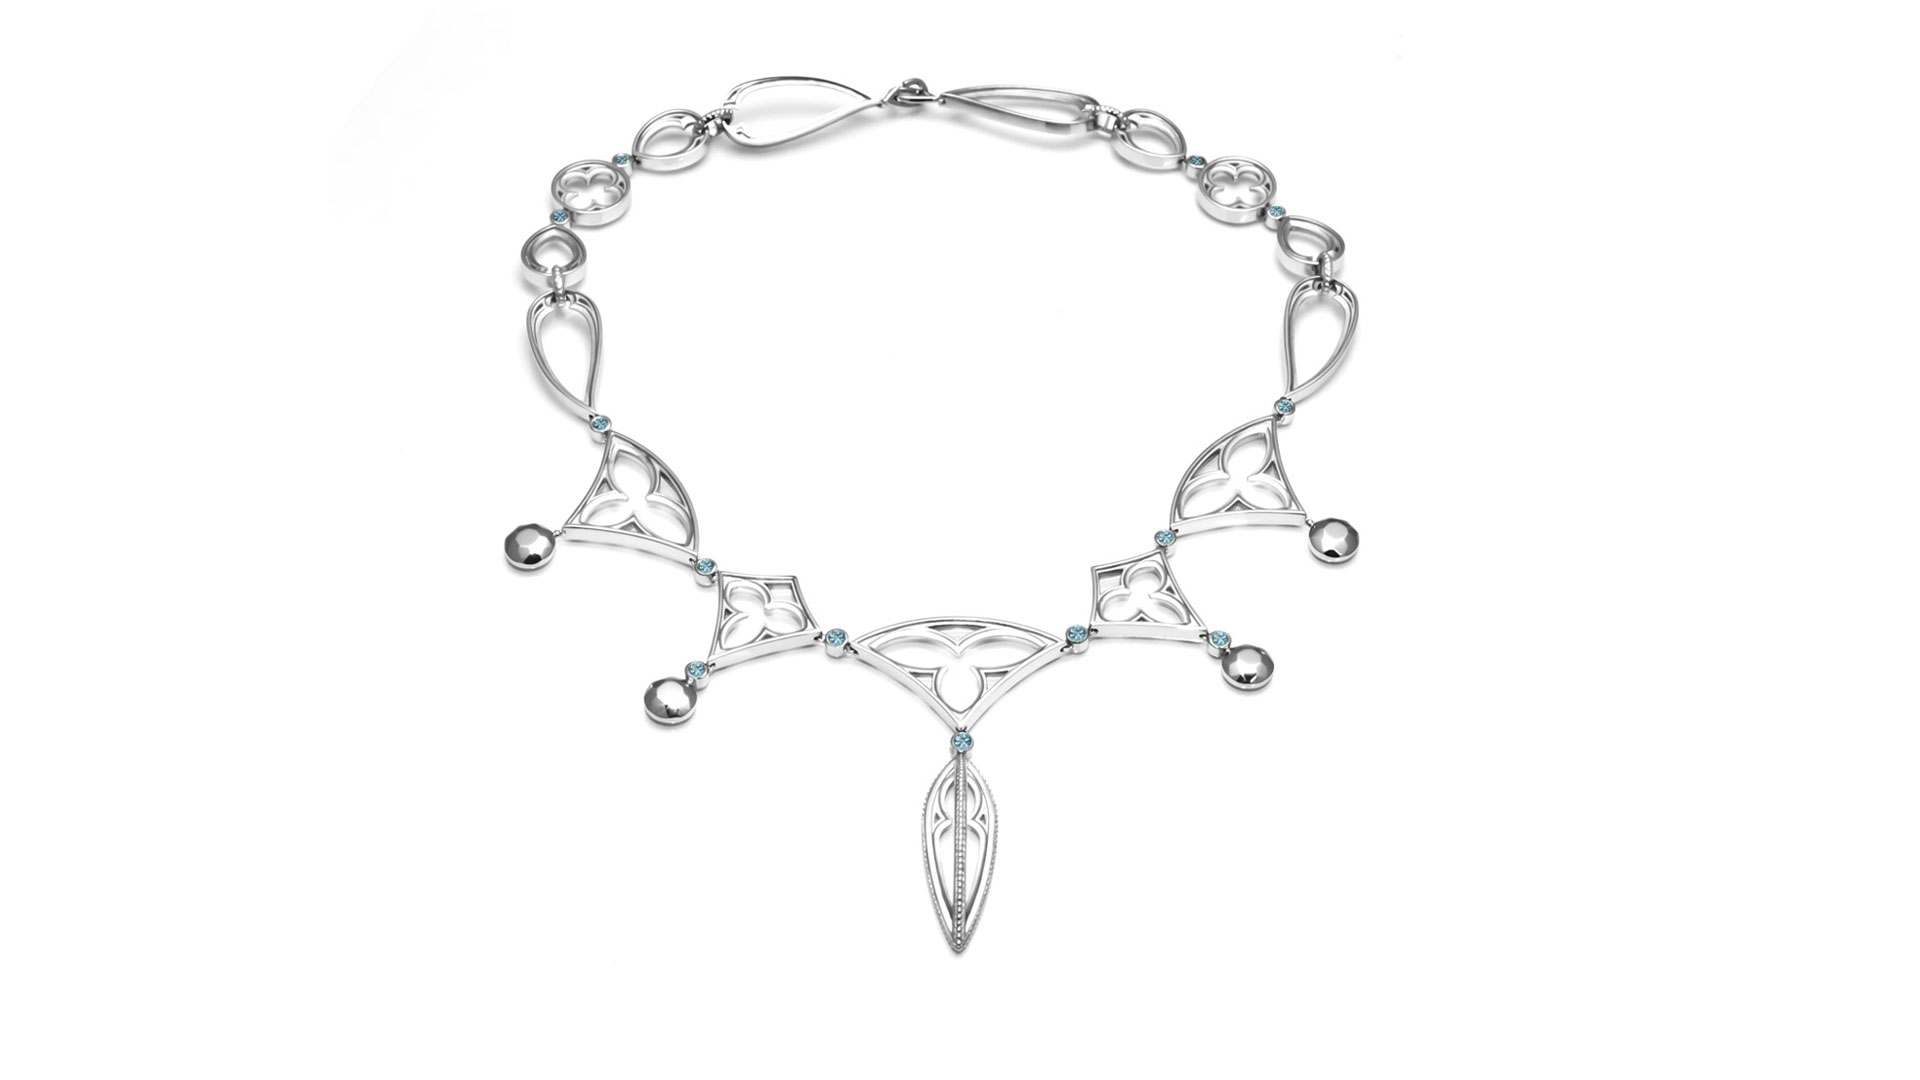 Palladium gotic necklace by Amber Worley